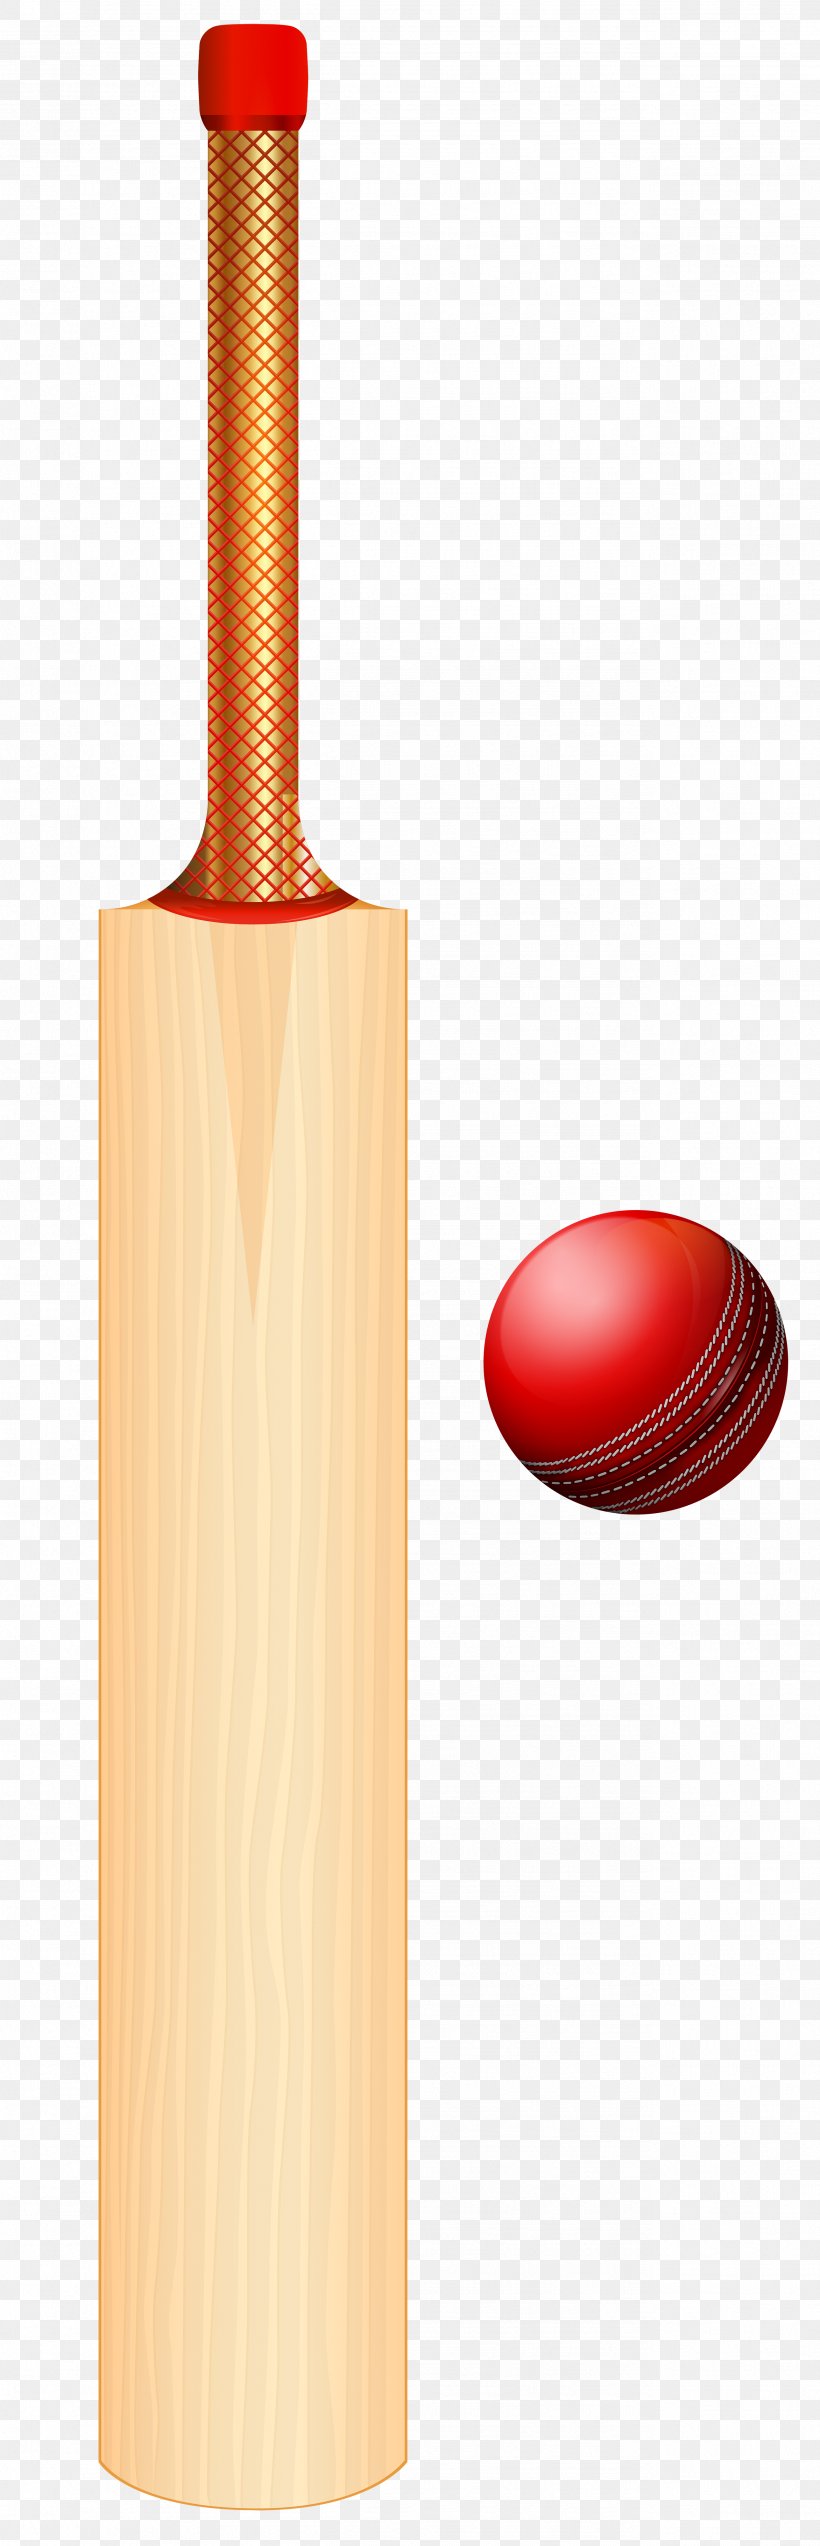 cricket bat trophy